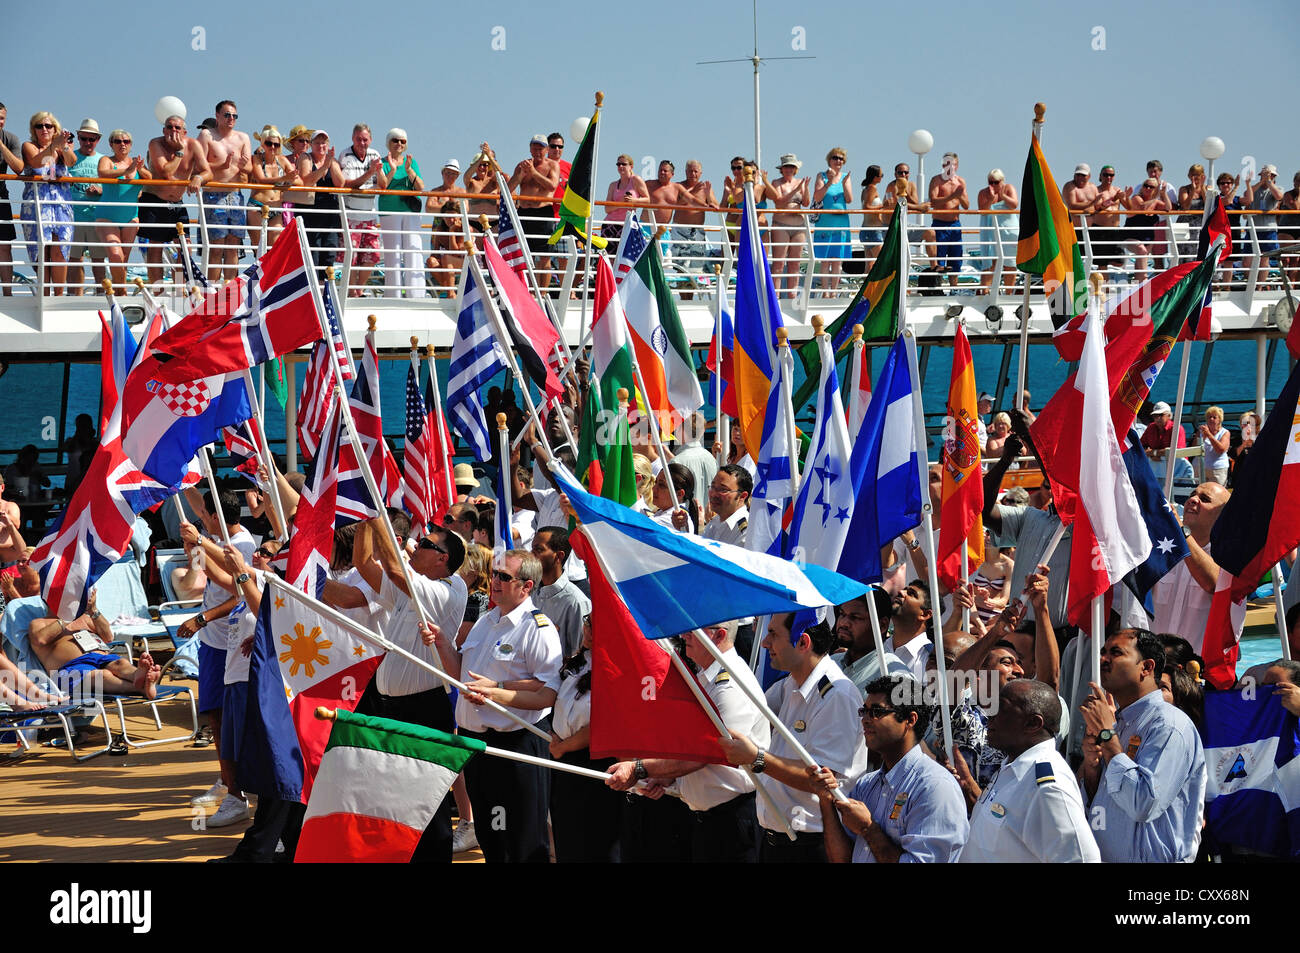 Internationales Personal Prozession an Bord von Royal Caribbean "Grandeur of the Seas" Kreuzfahrt Schiff, Adria, Mittelmeer, Europa Stockfoto